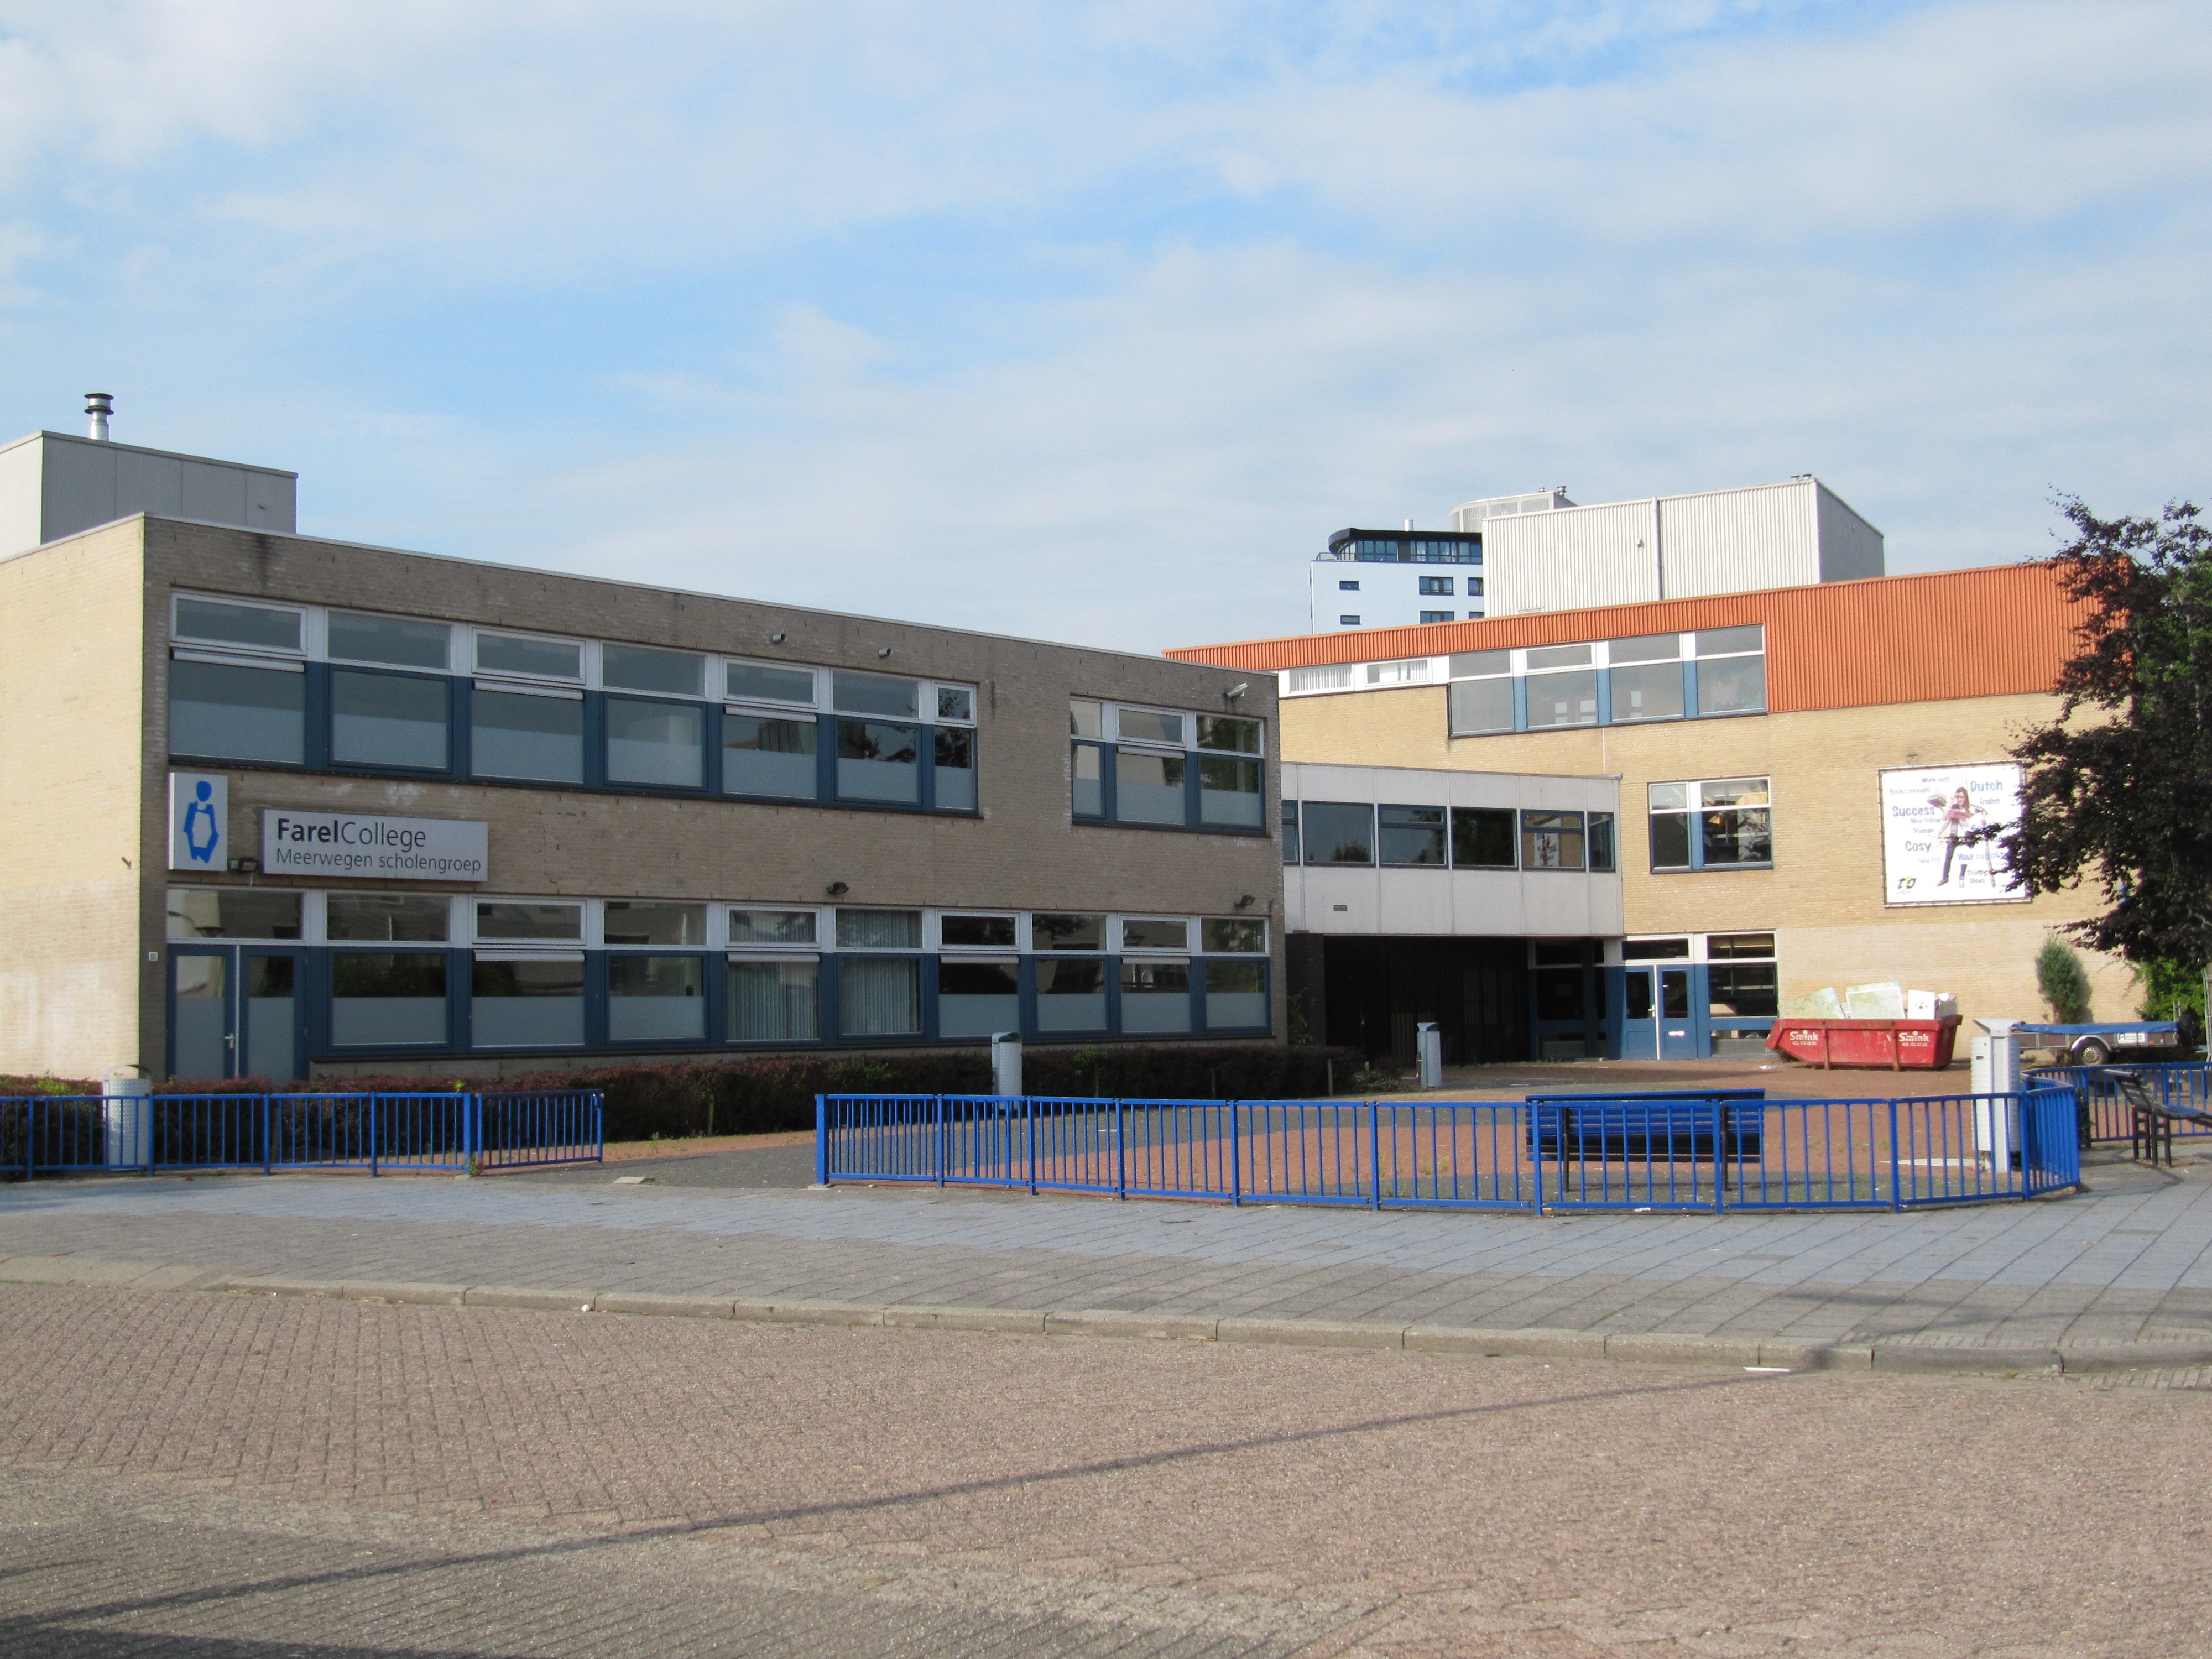 The Farel College, Amersfoort